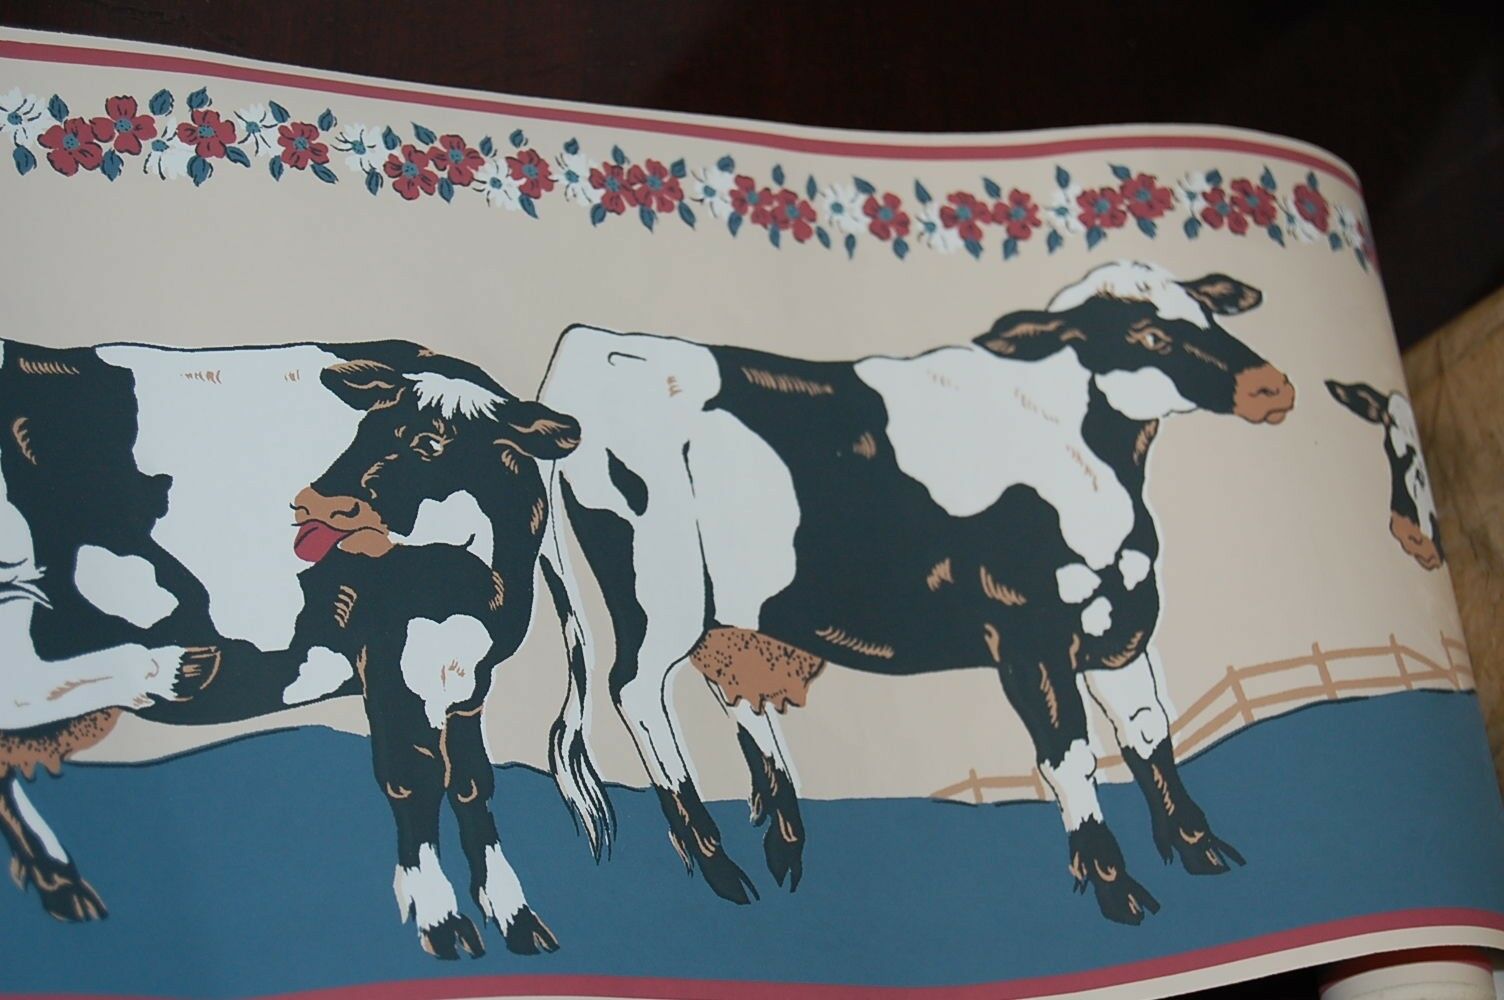 Dairy Cow - HD Wallpaper 